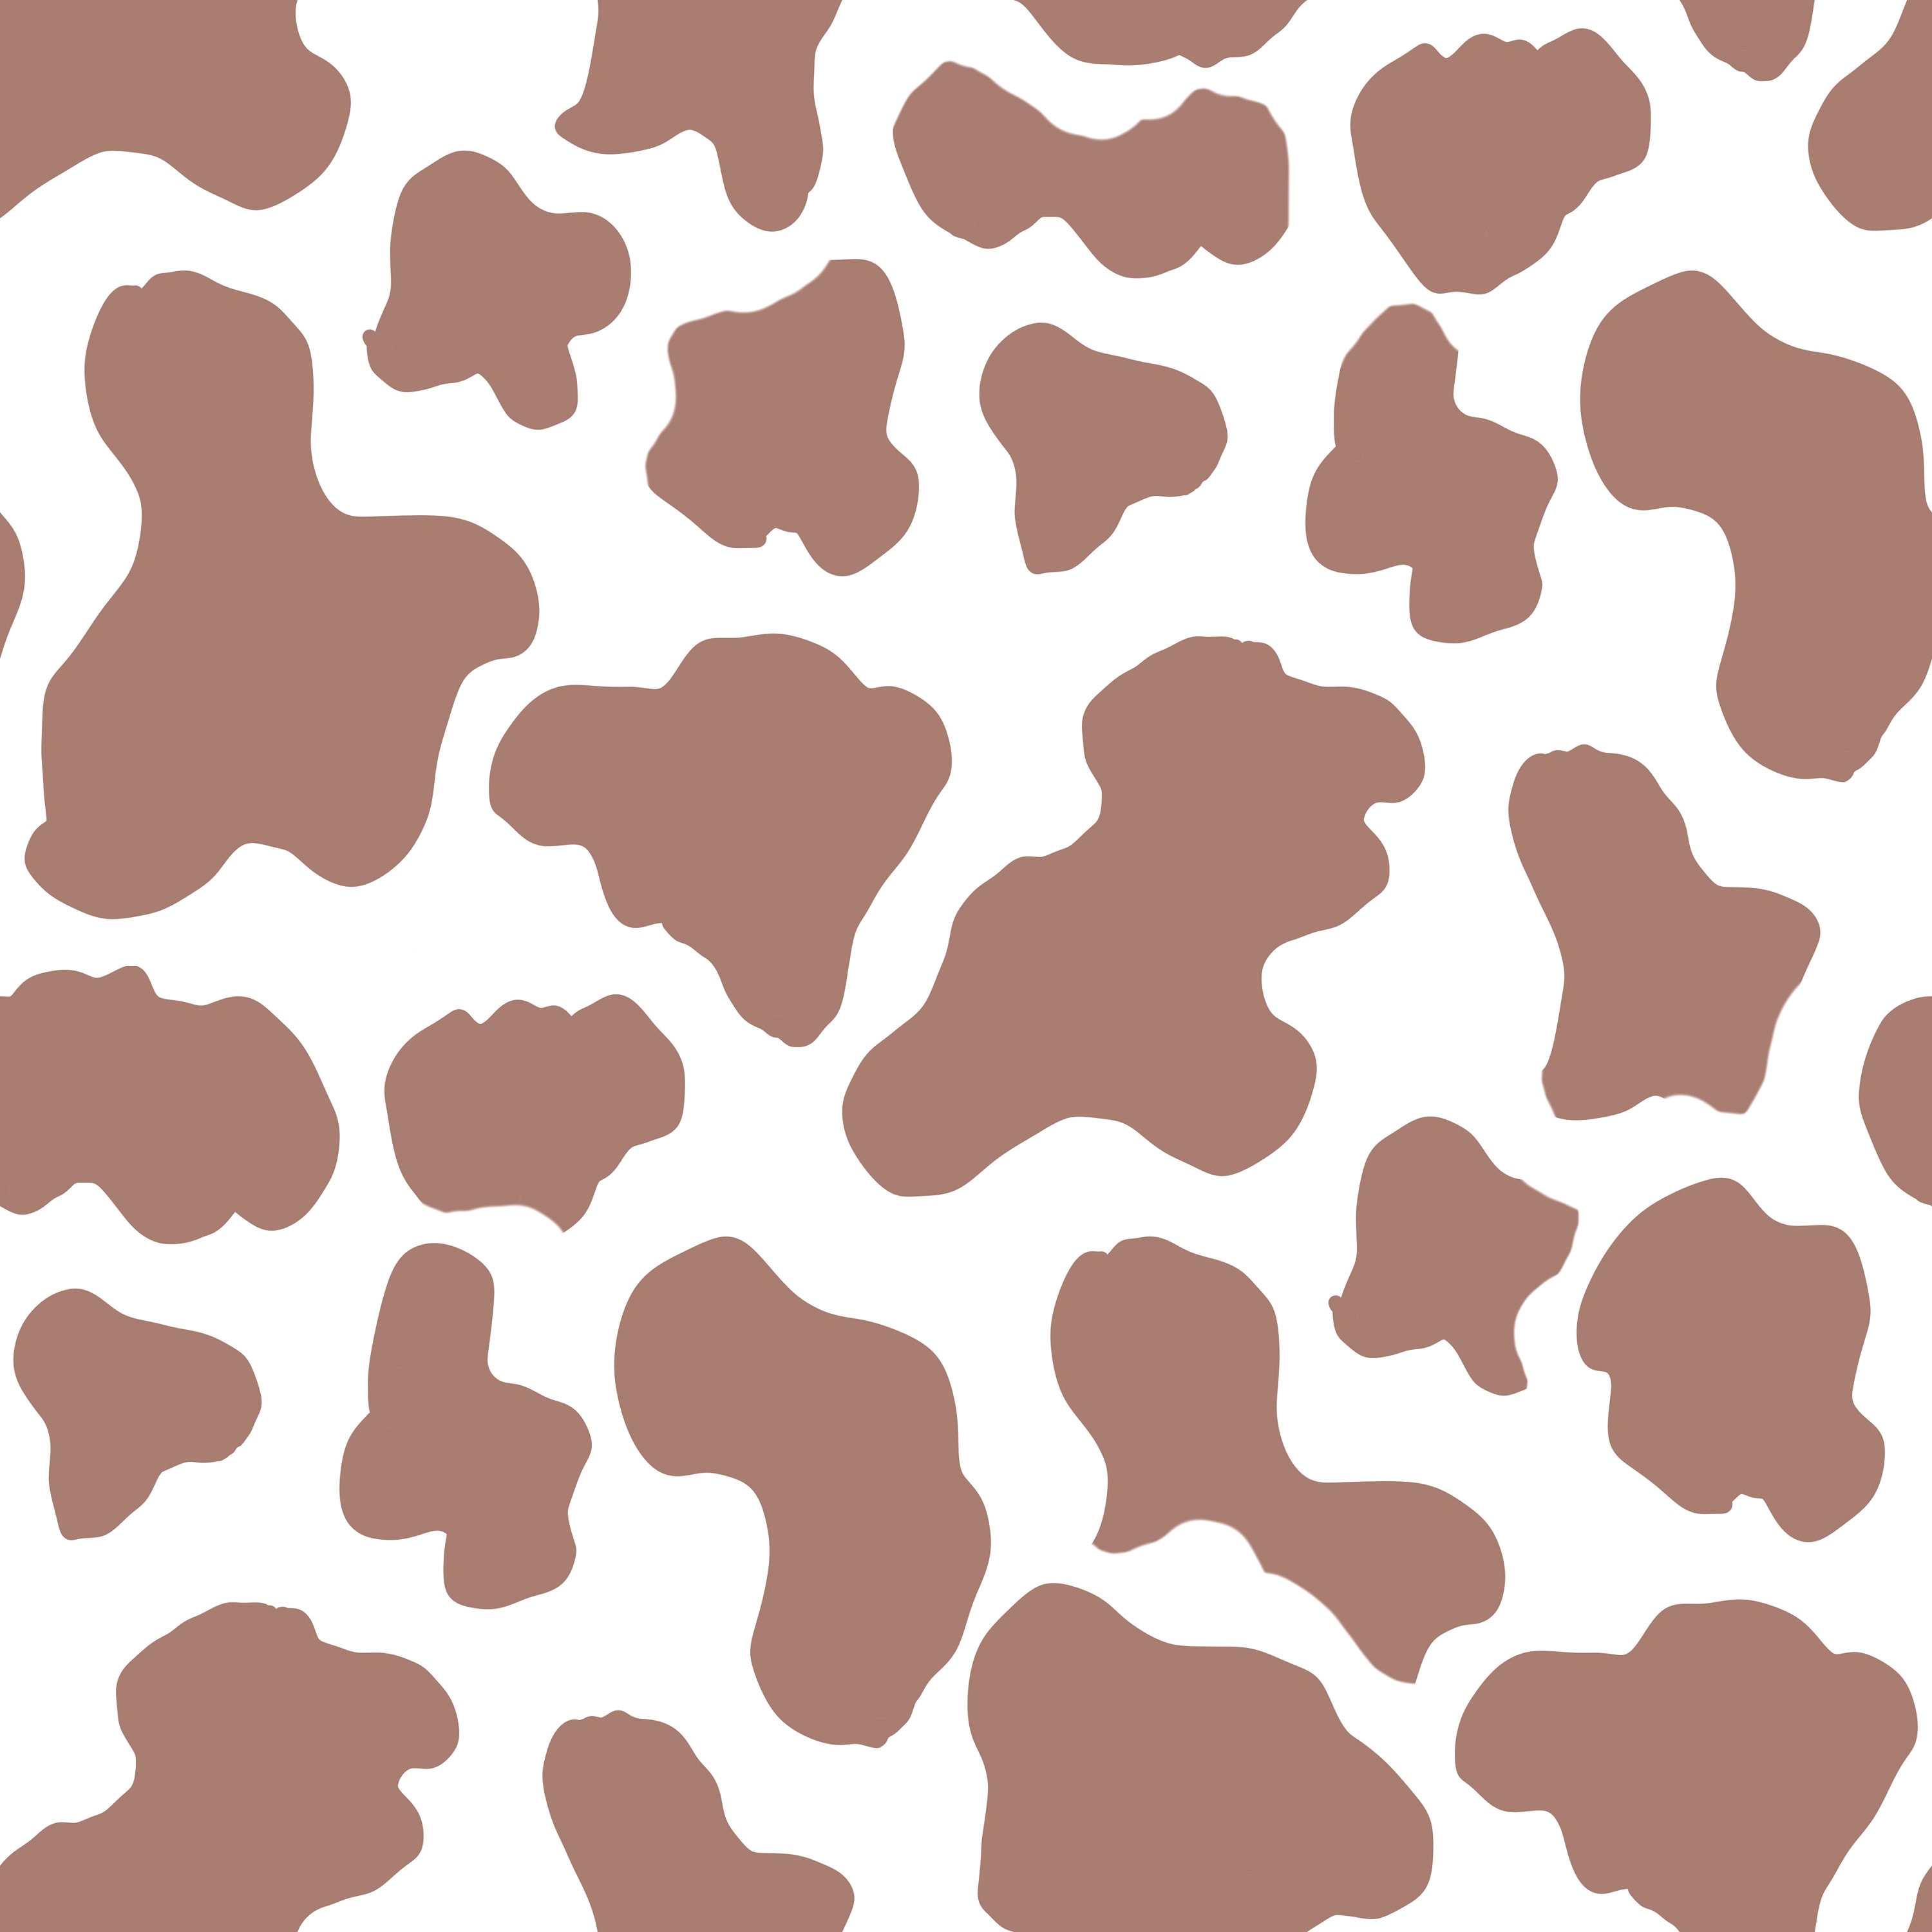 Brown Cow Print Seamless Repeat Digital Pattern Repeat for.